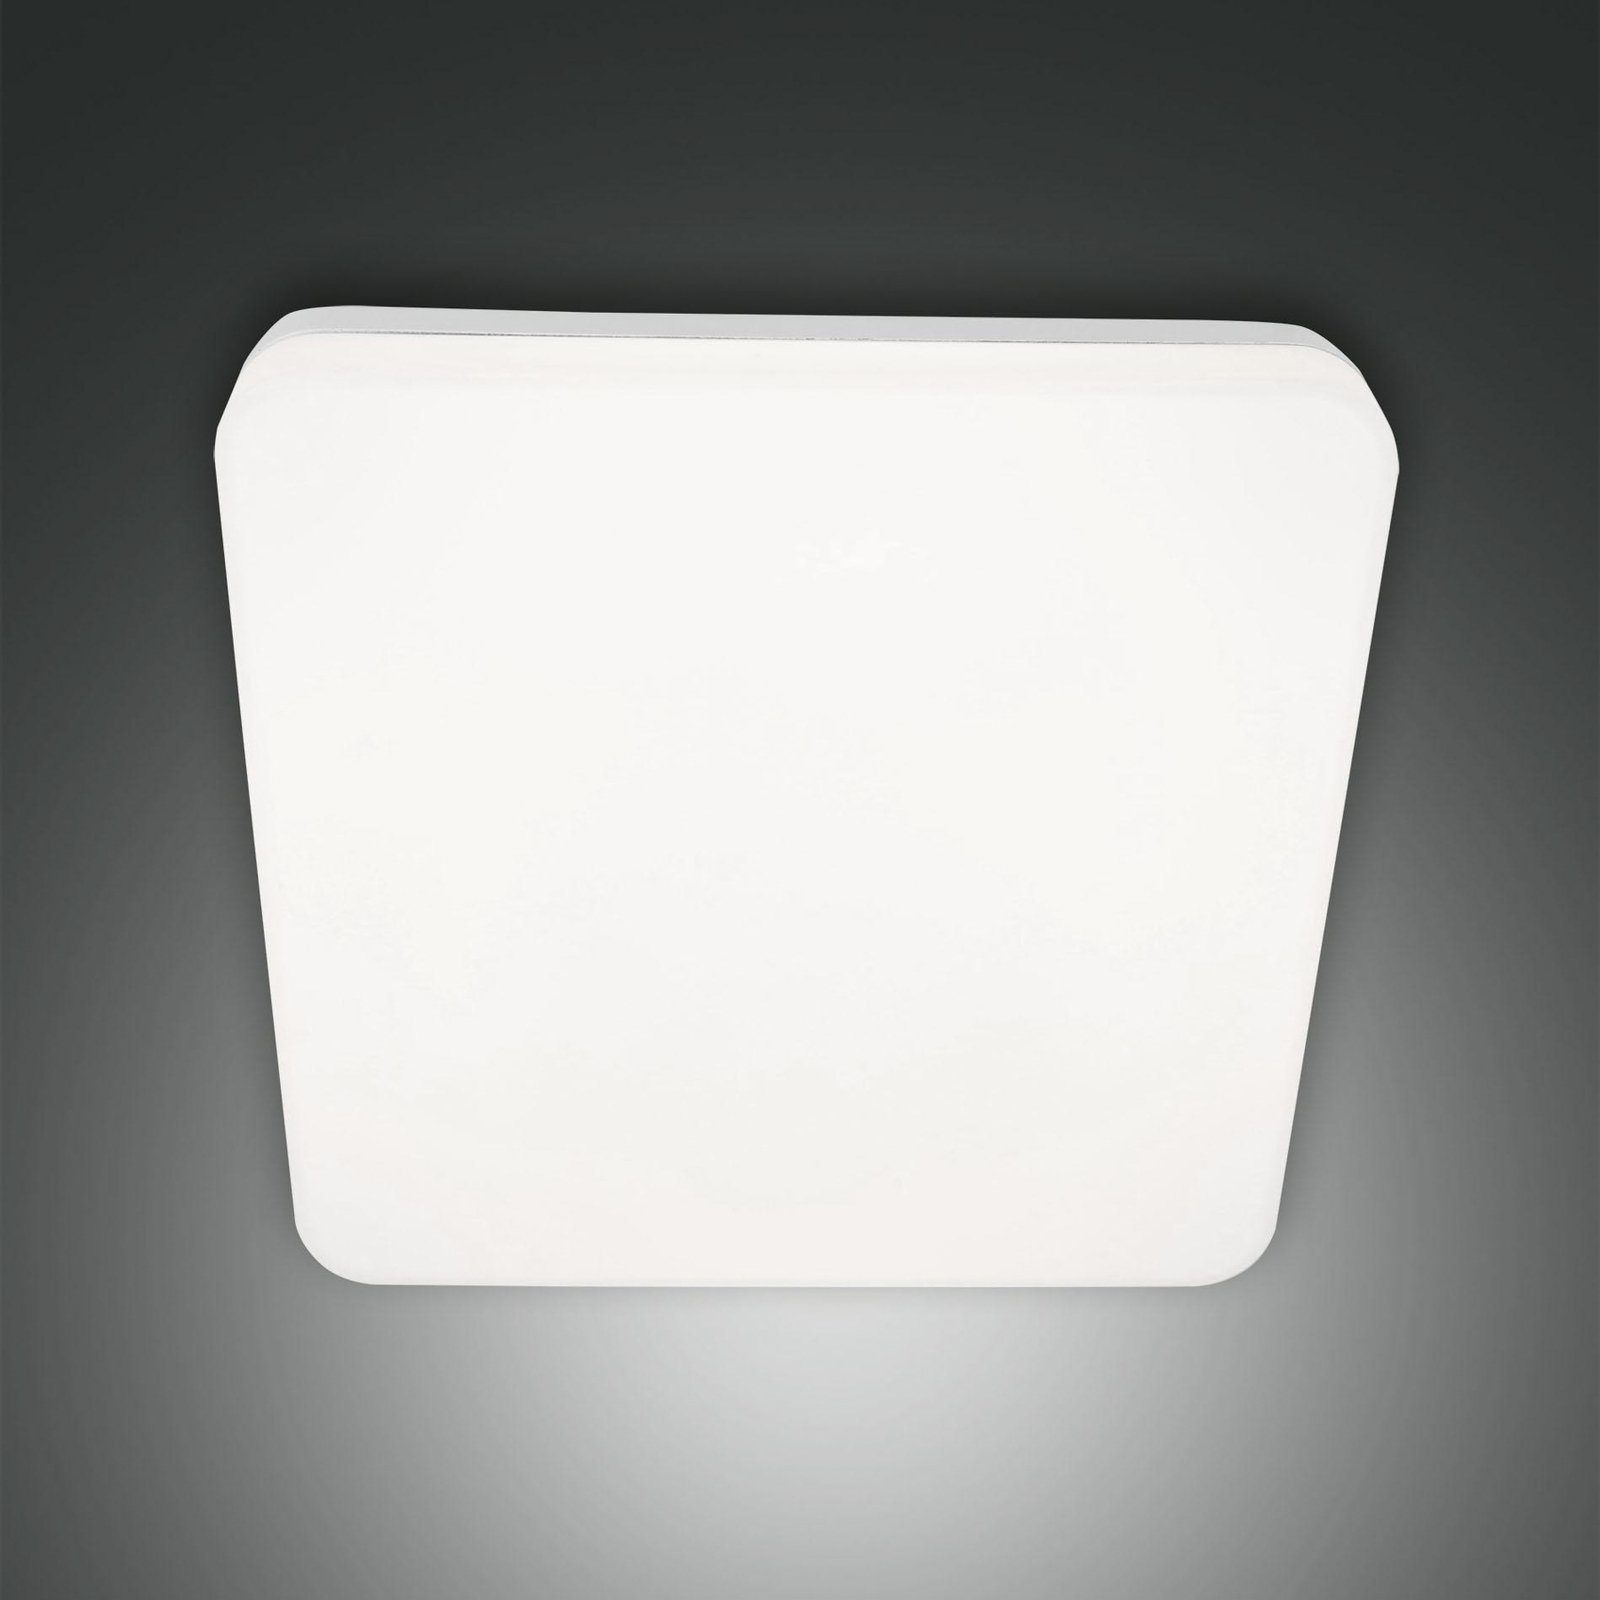 Folk LED buiten plafondlamp, sensor, 28 x 28 cm, wit, IP65